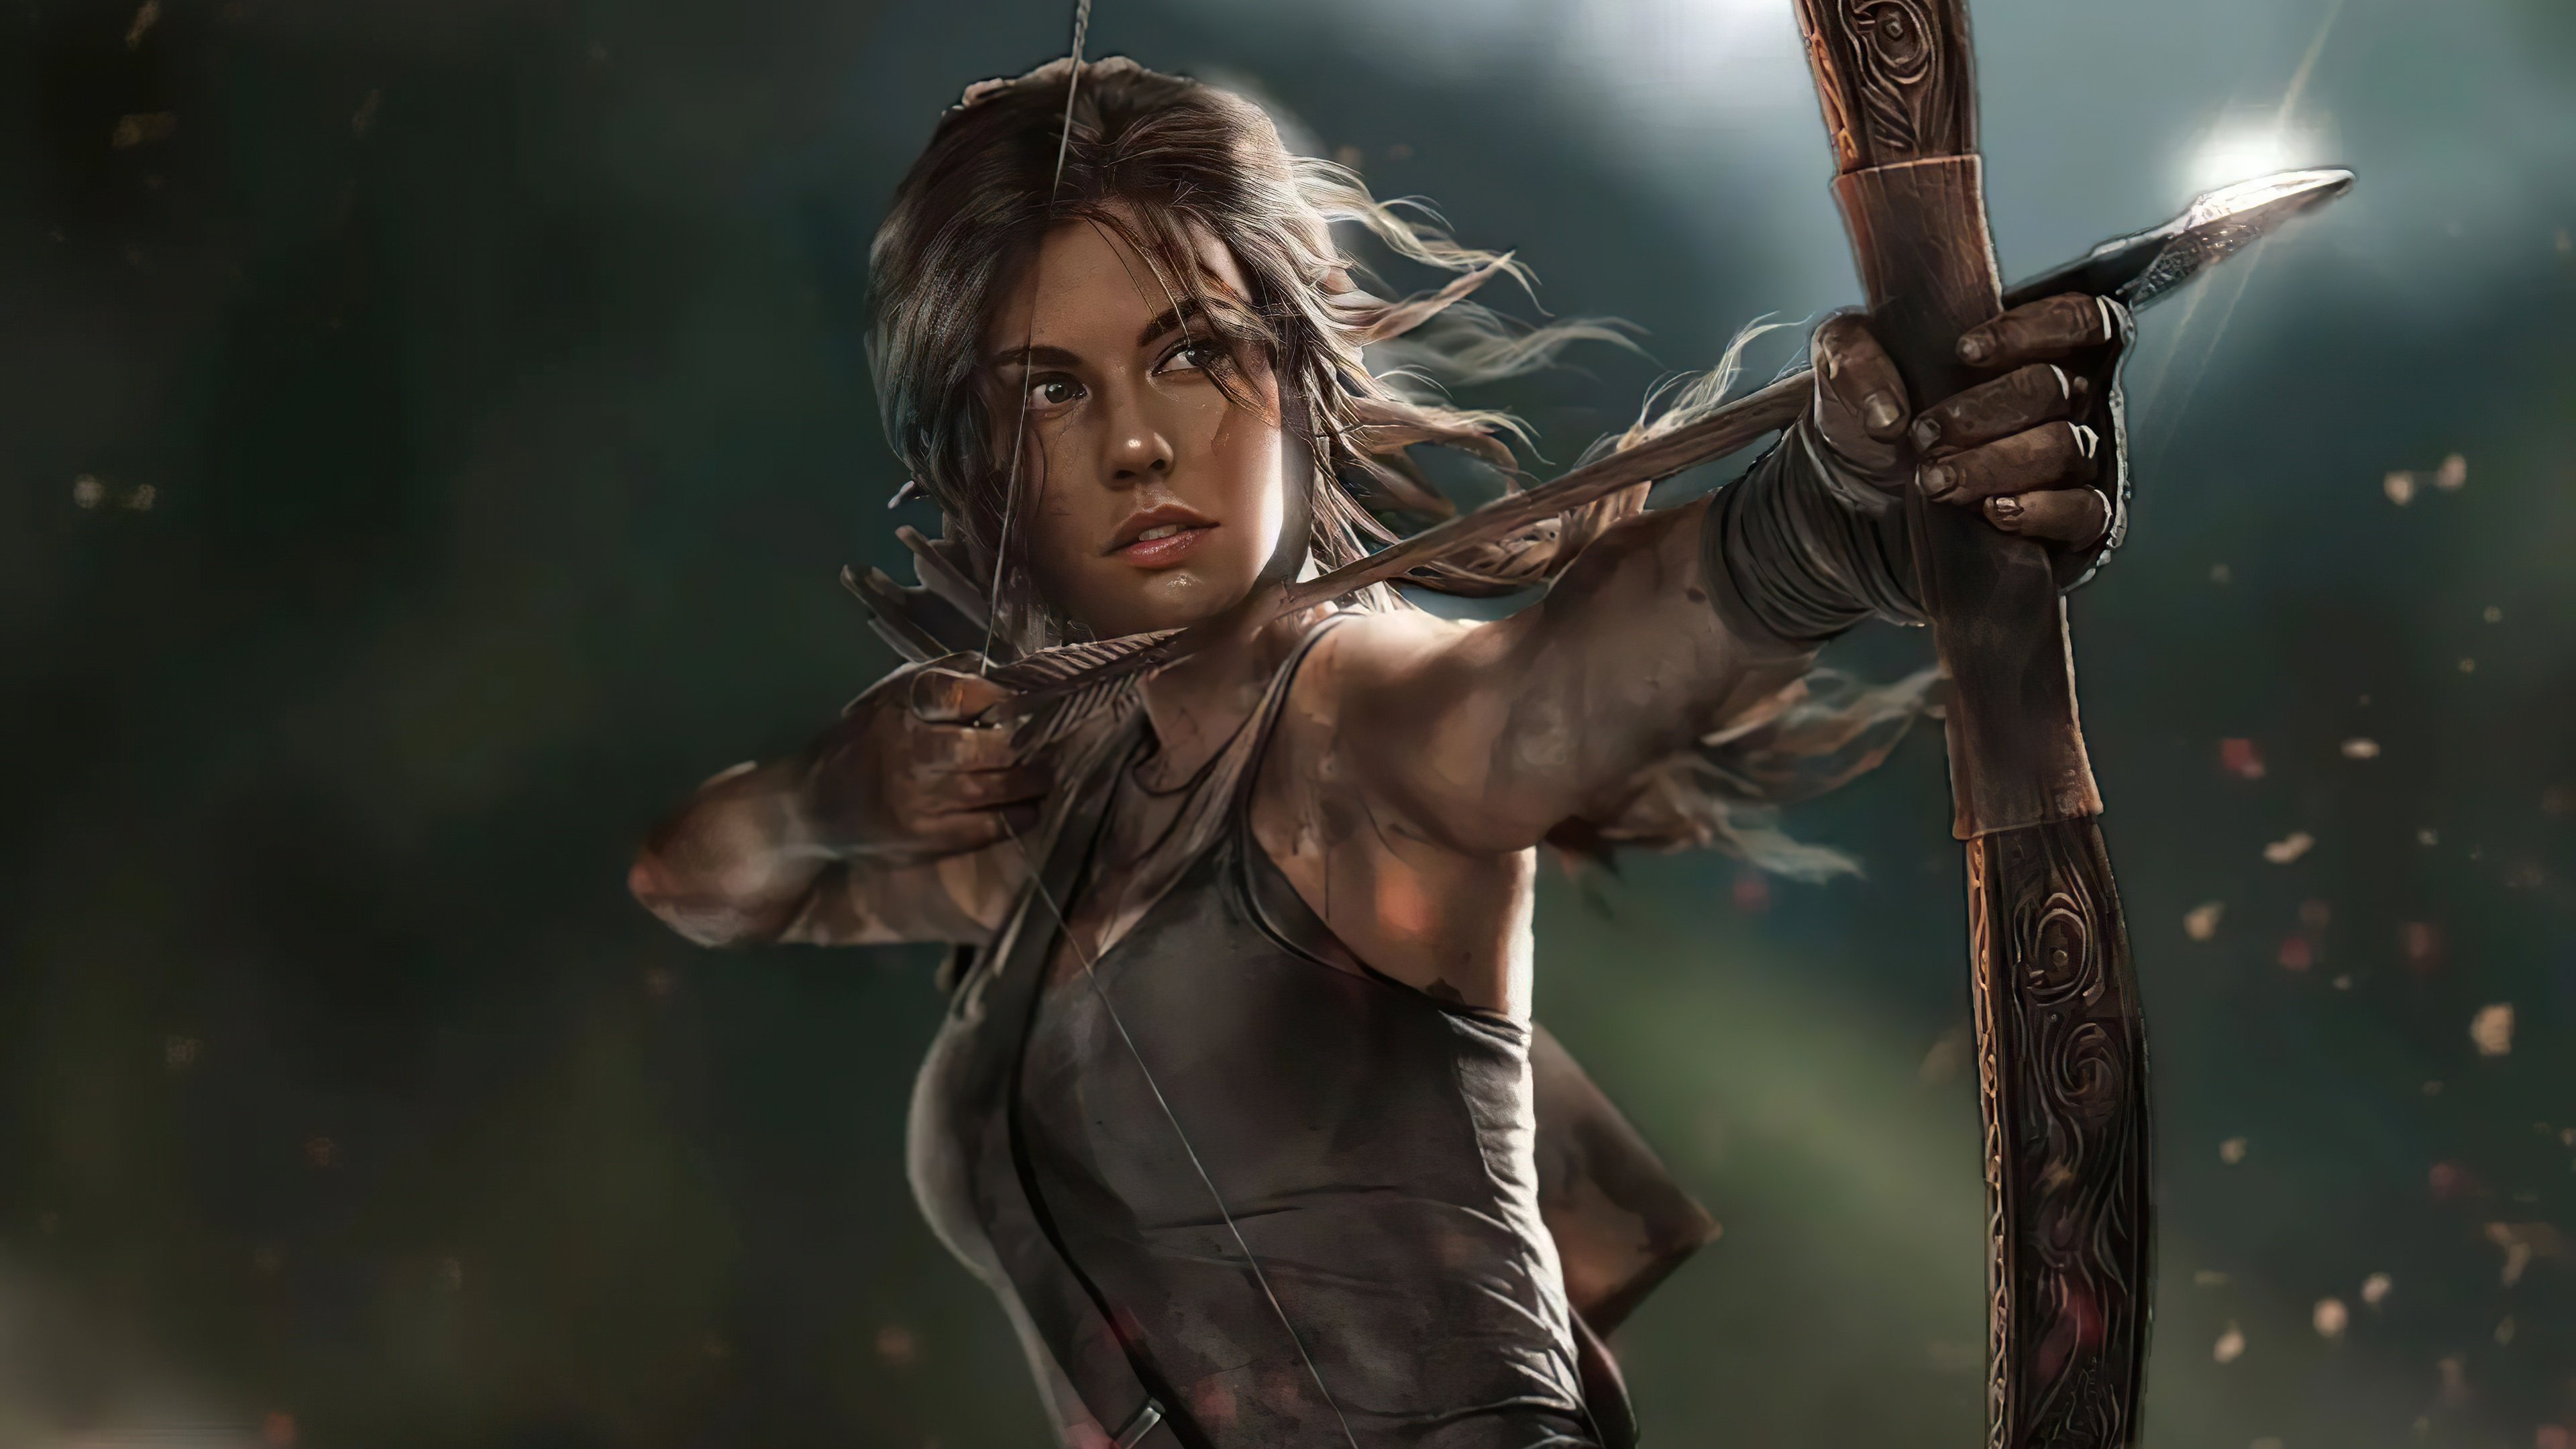 Lauren Cohan as Lara Croft The Tomb Raider Wallpaper 4k Ultra HD ID:11389